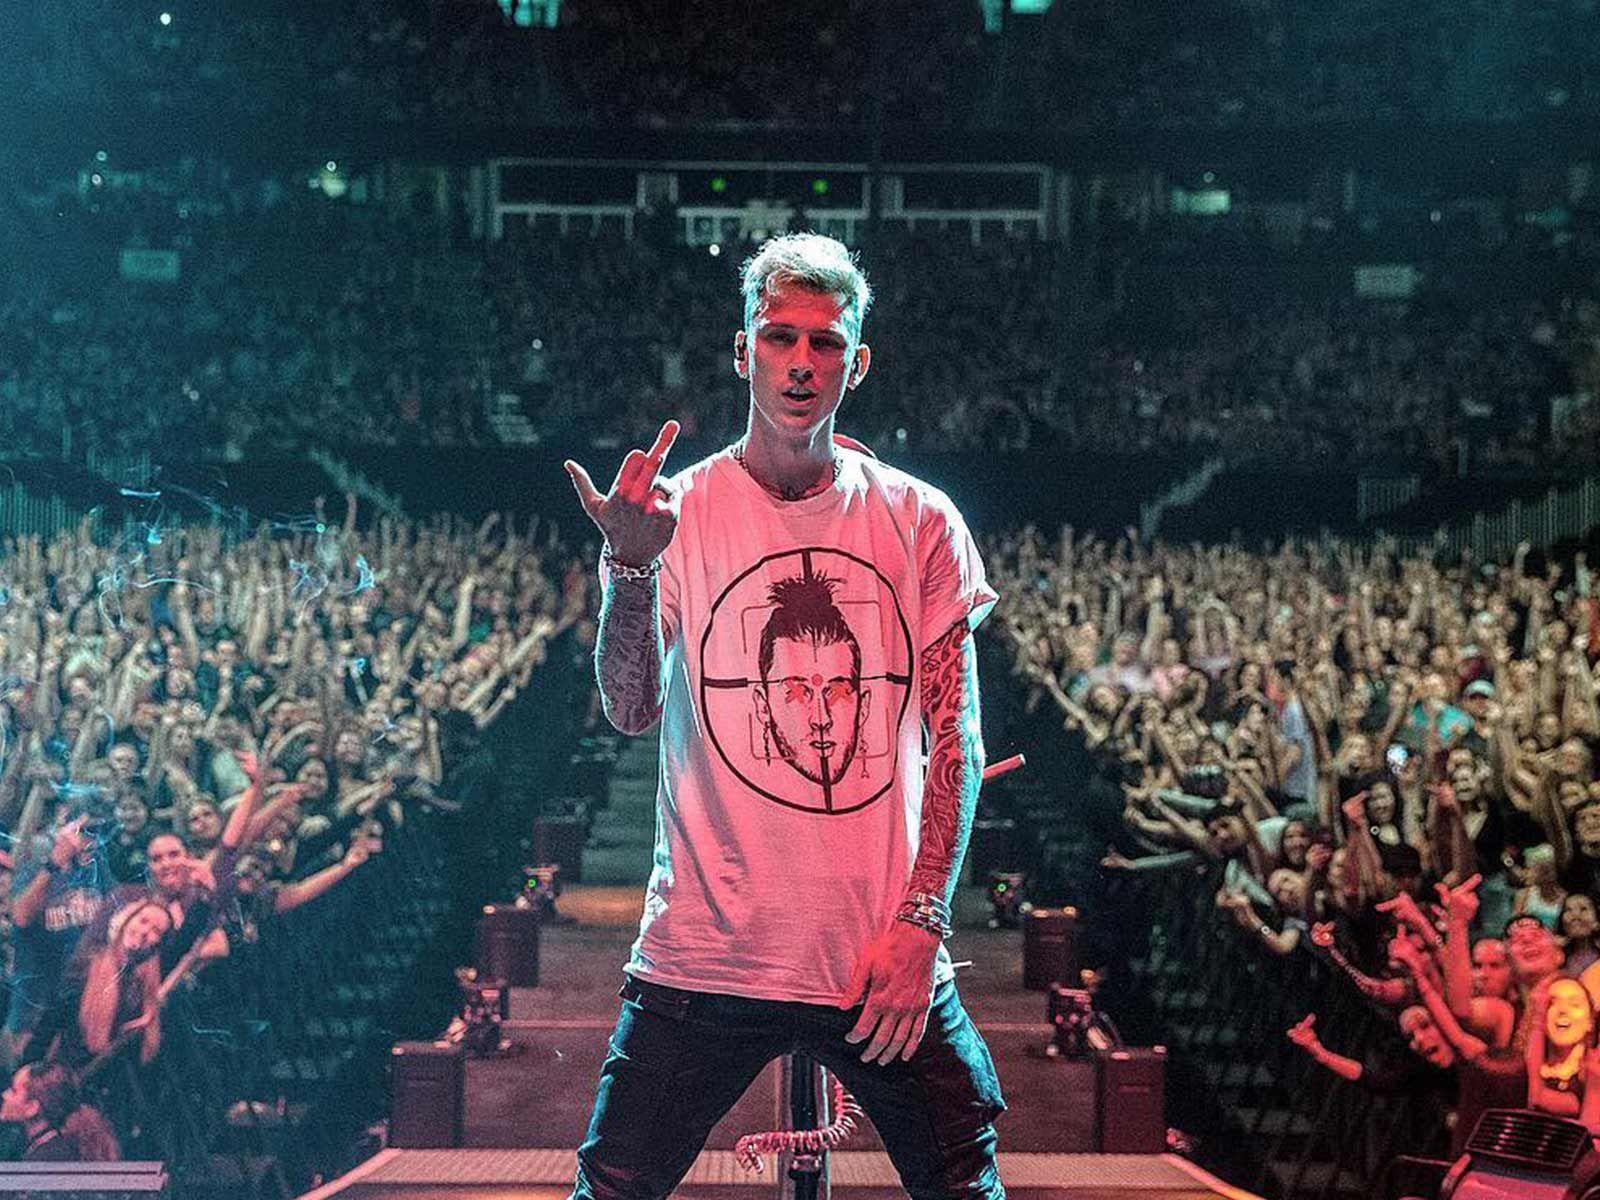 Machine Gun Kelly Trolls Eminem While Wearing 'KILLSHOT' Shirt at